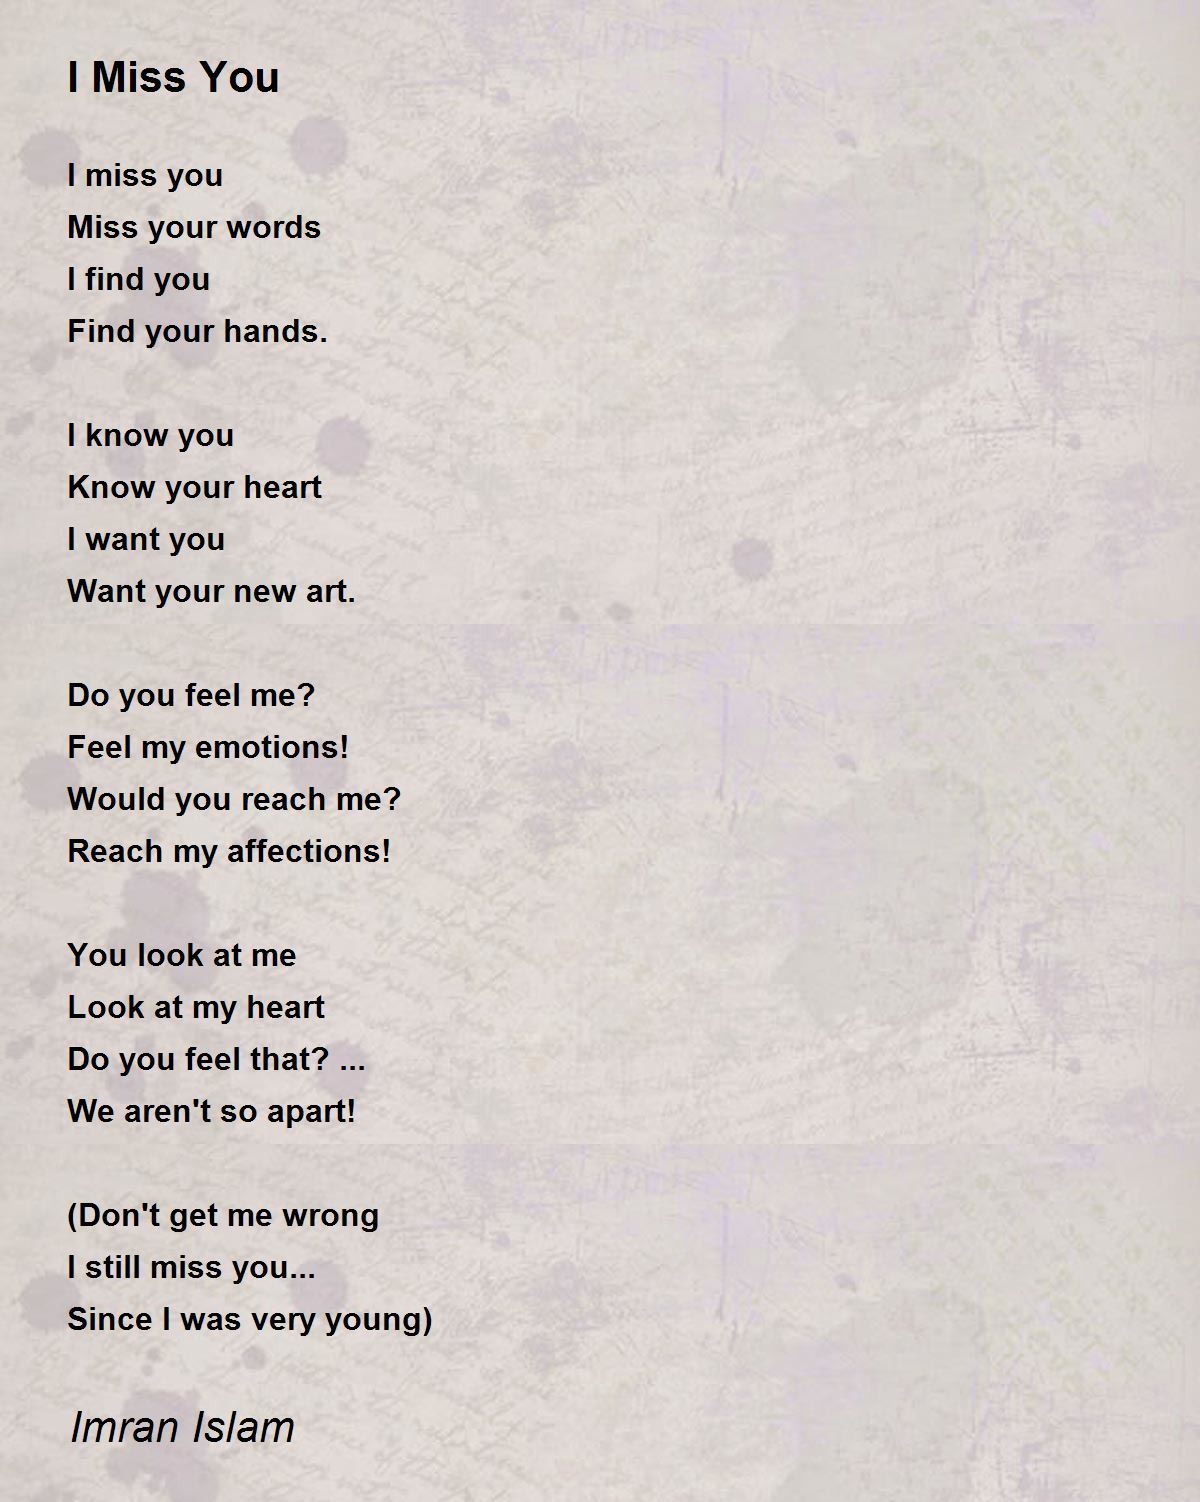 I Miss You - I Miss You Poem by Imran Islam